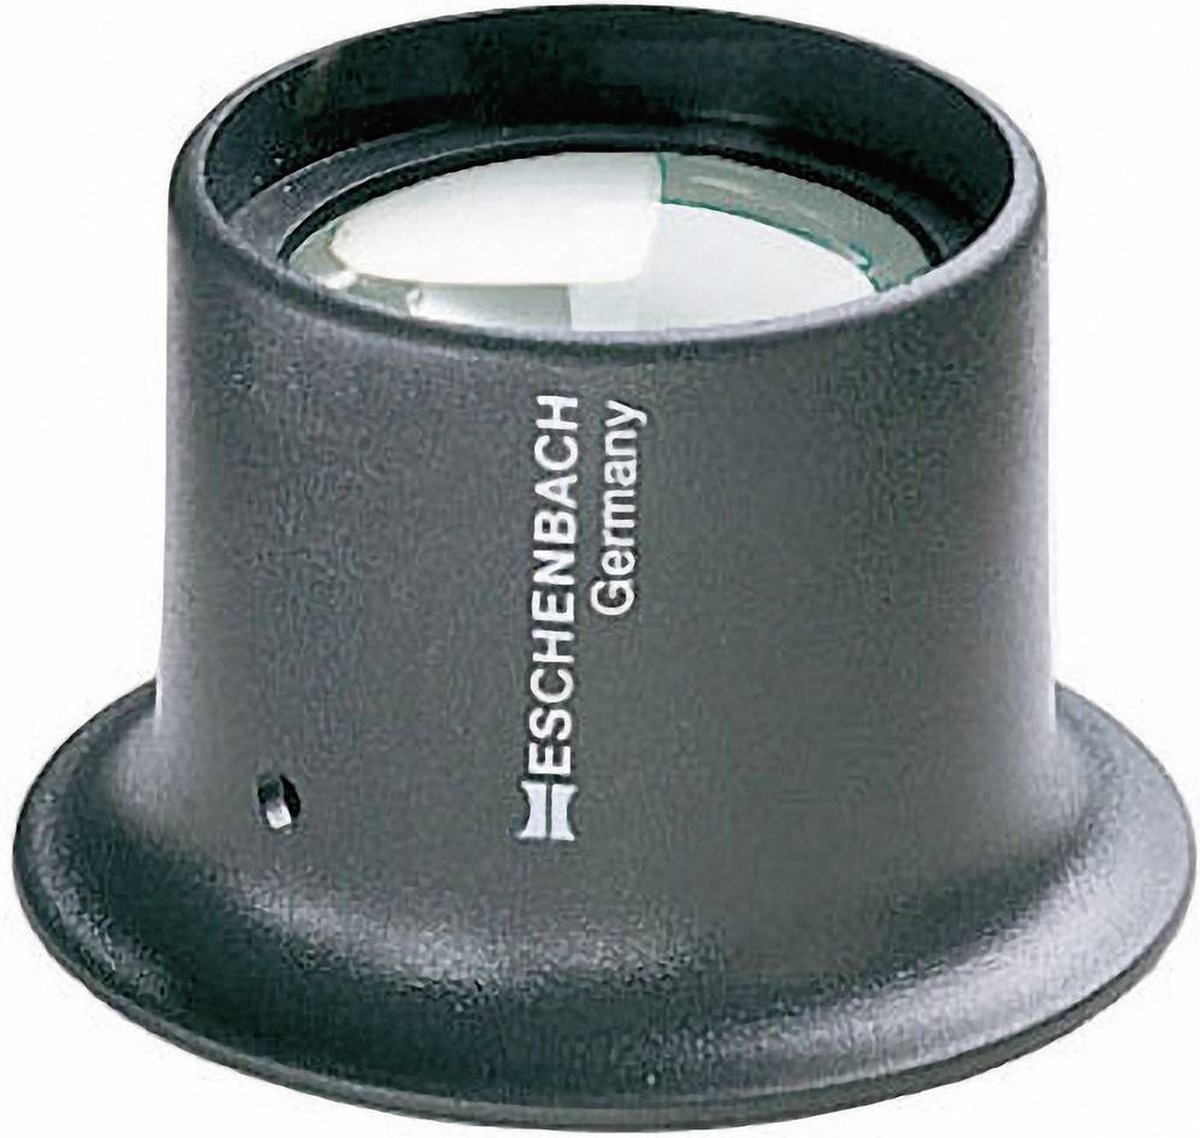 Eschenbach 1124110 Horlogemakersloep Vergrotingsfactor: 10 x Lensgrootte: (Ø) 25 mm Antraciet - Eschenbach